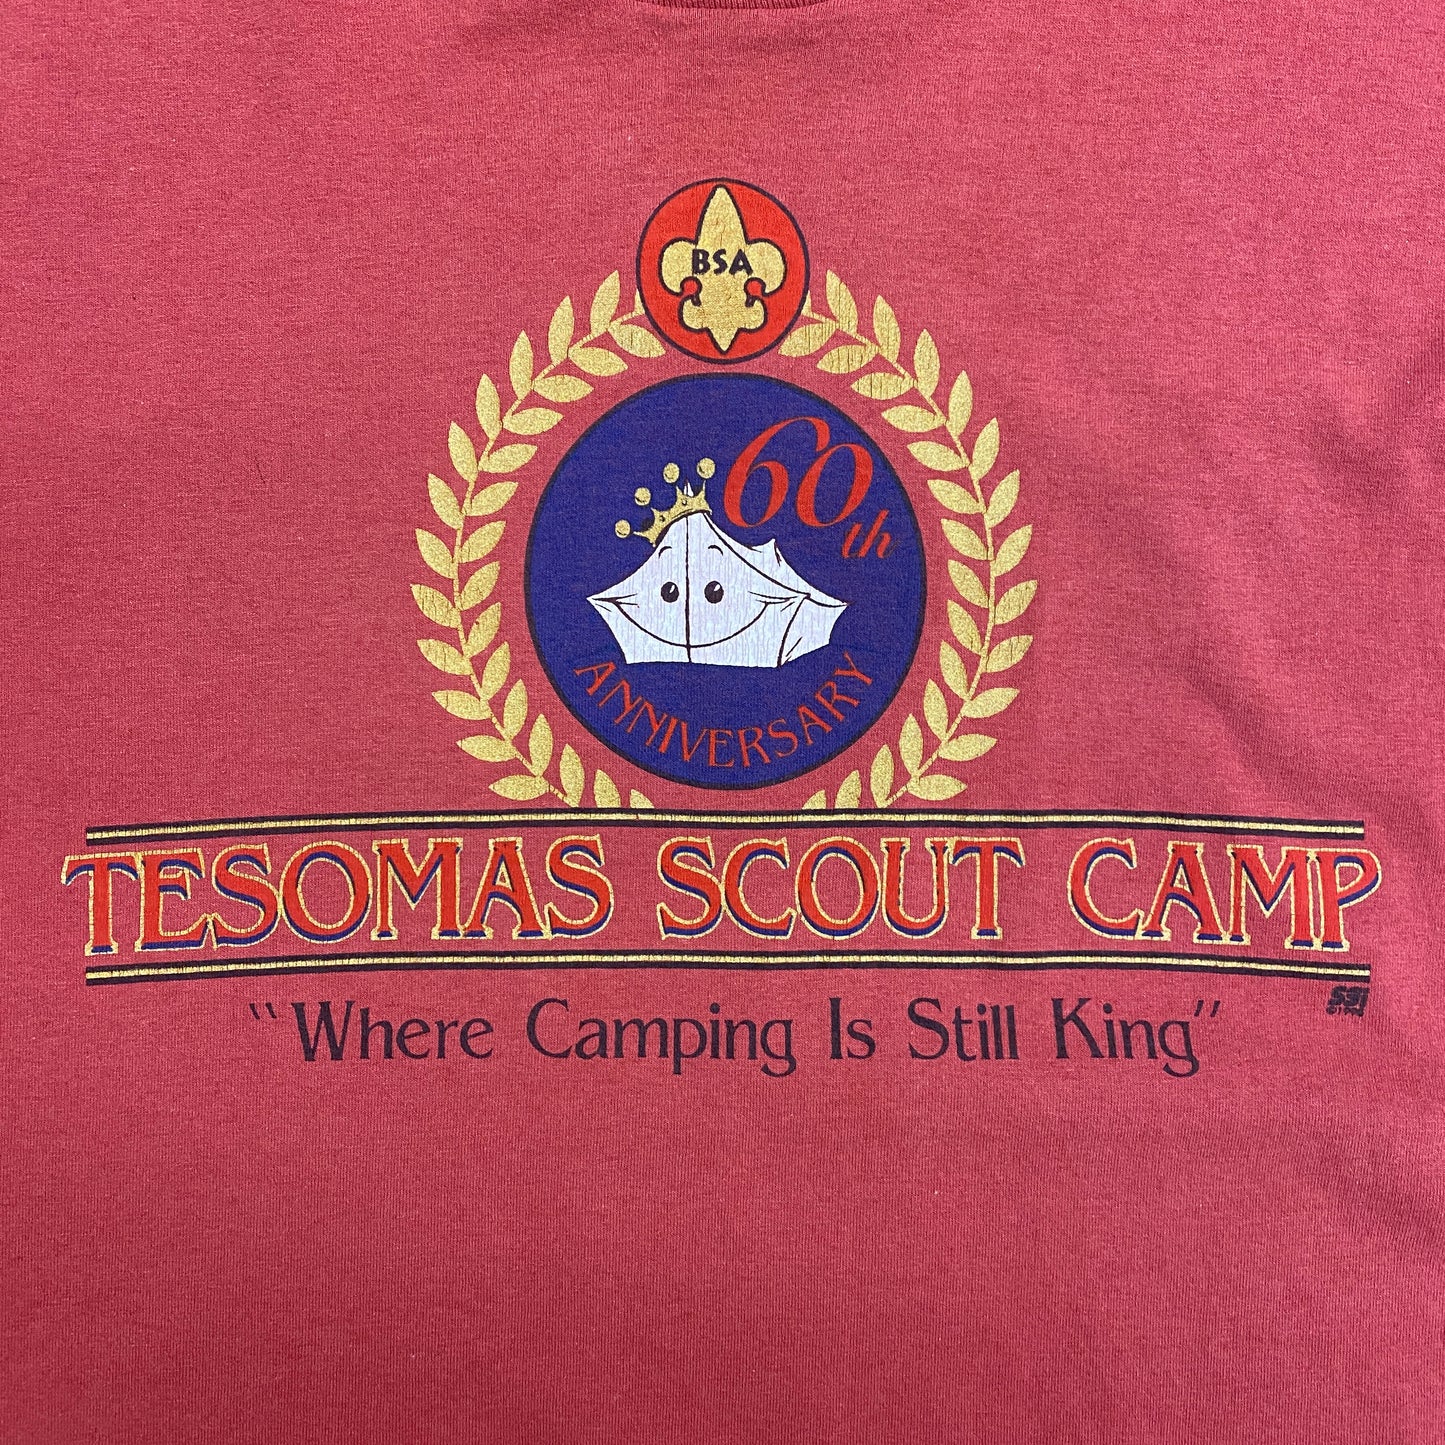 Vintage 1990s Boy Scouts "Tesomas Scout Camp" Tee - Size XXL